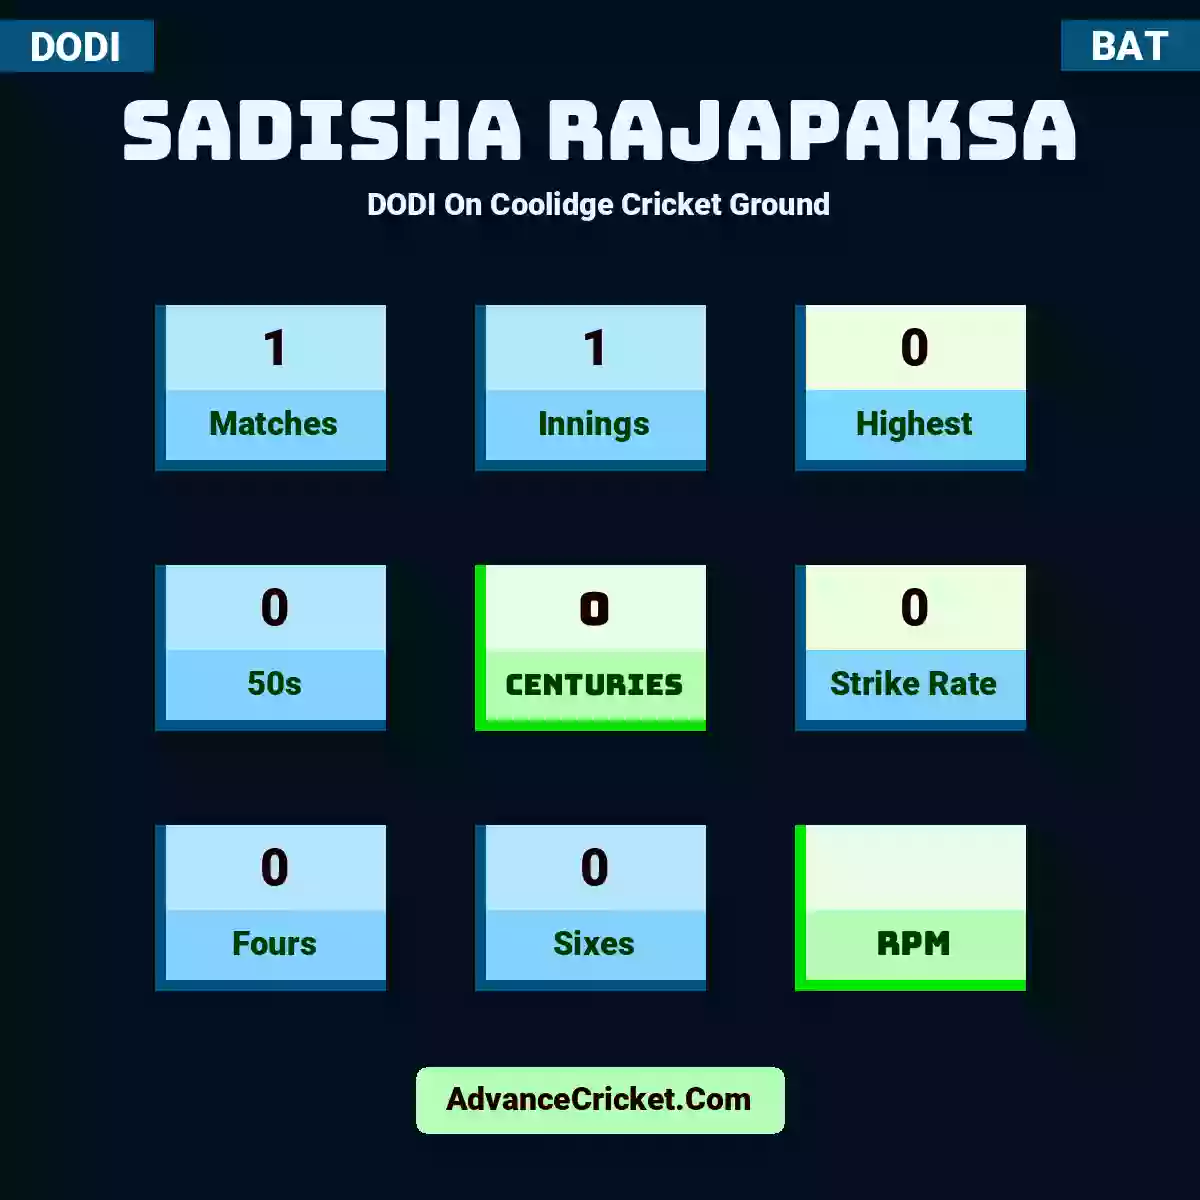 Sadisha Rajapaksa DODI  On Coolidge Cricket Ground, Sadisha Rajapaksa played 1 matches, scored 0 runs as highest, 0 half-centuries, and 0 centuries, with a strike rate of 0. S.Rajapaksa hit 0 fours and 0 sixes.